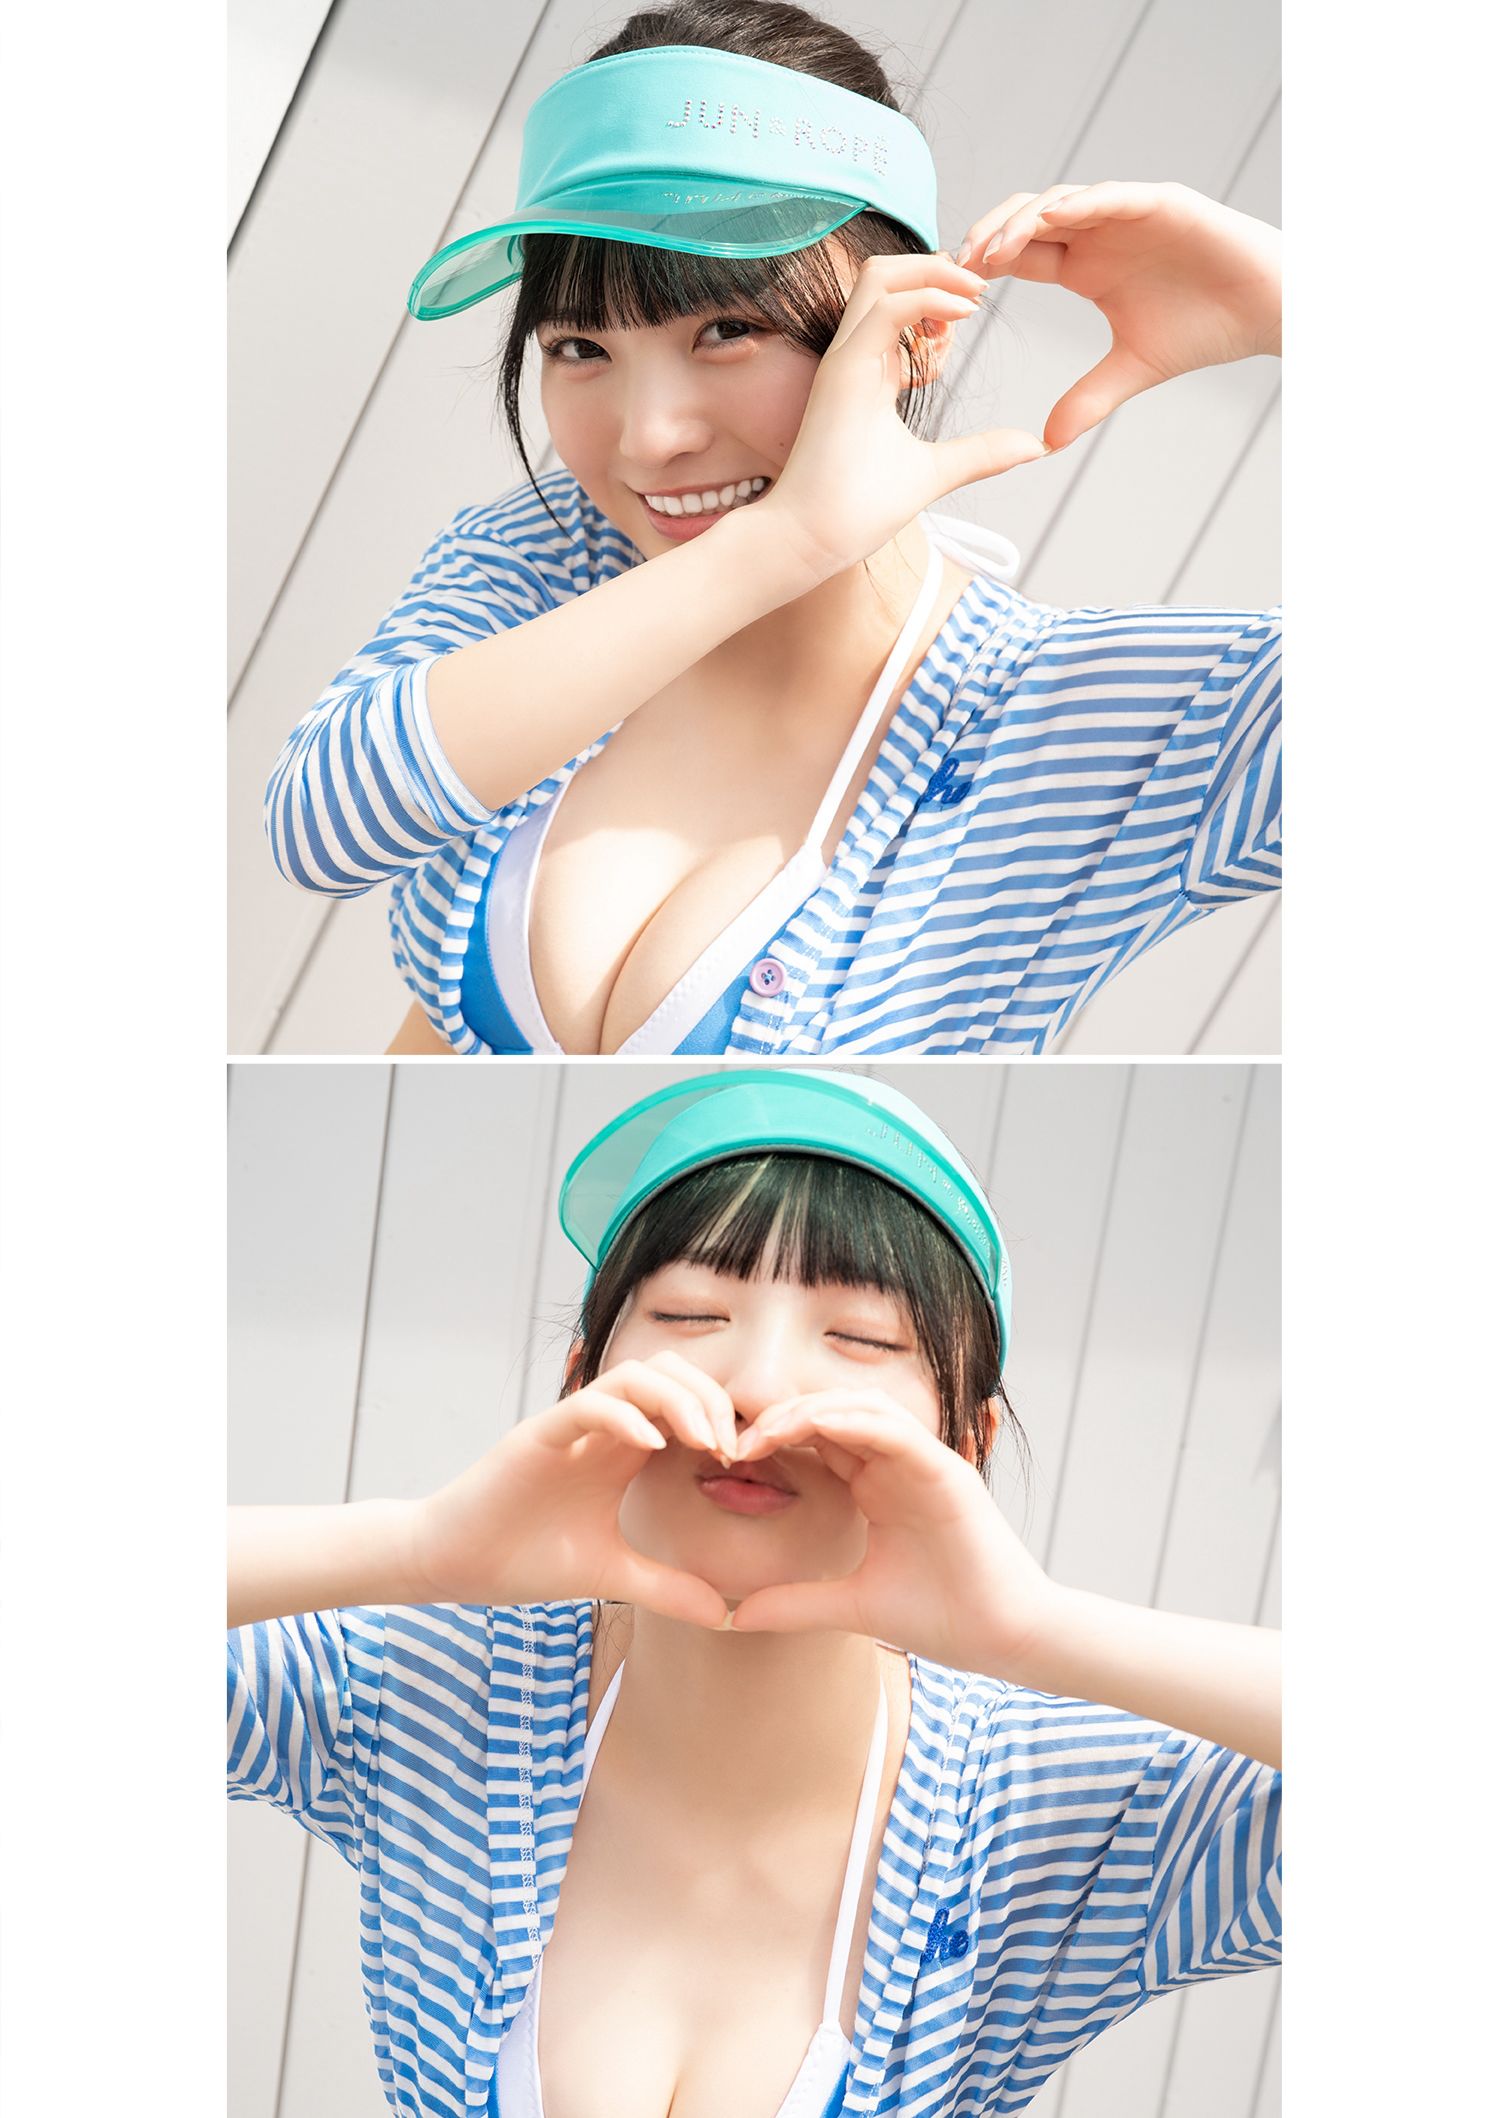 [photobook] 由良ゆら(#よーよーよー)写真集「“Azatoi”Summer Girl」/(51P)